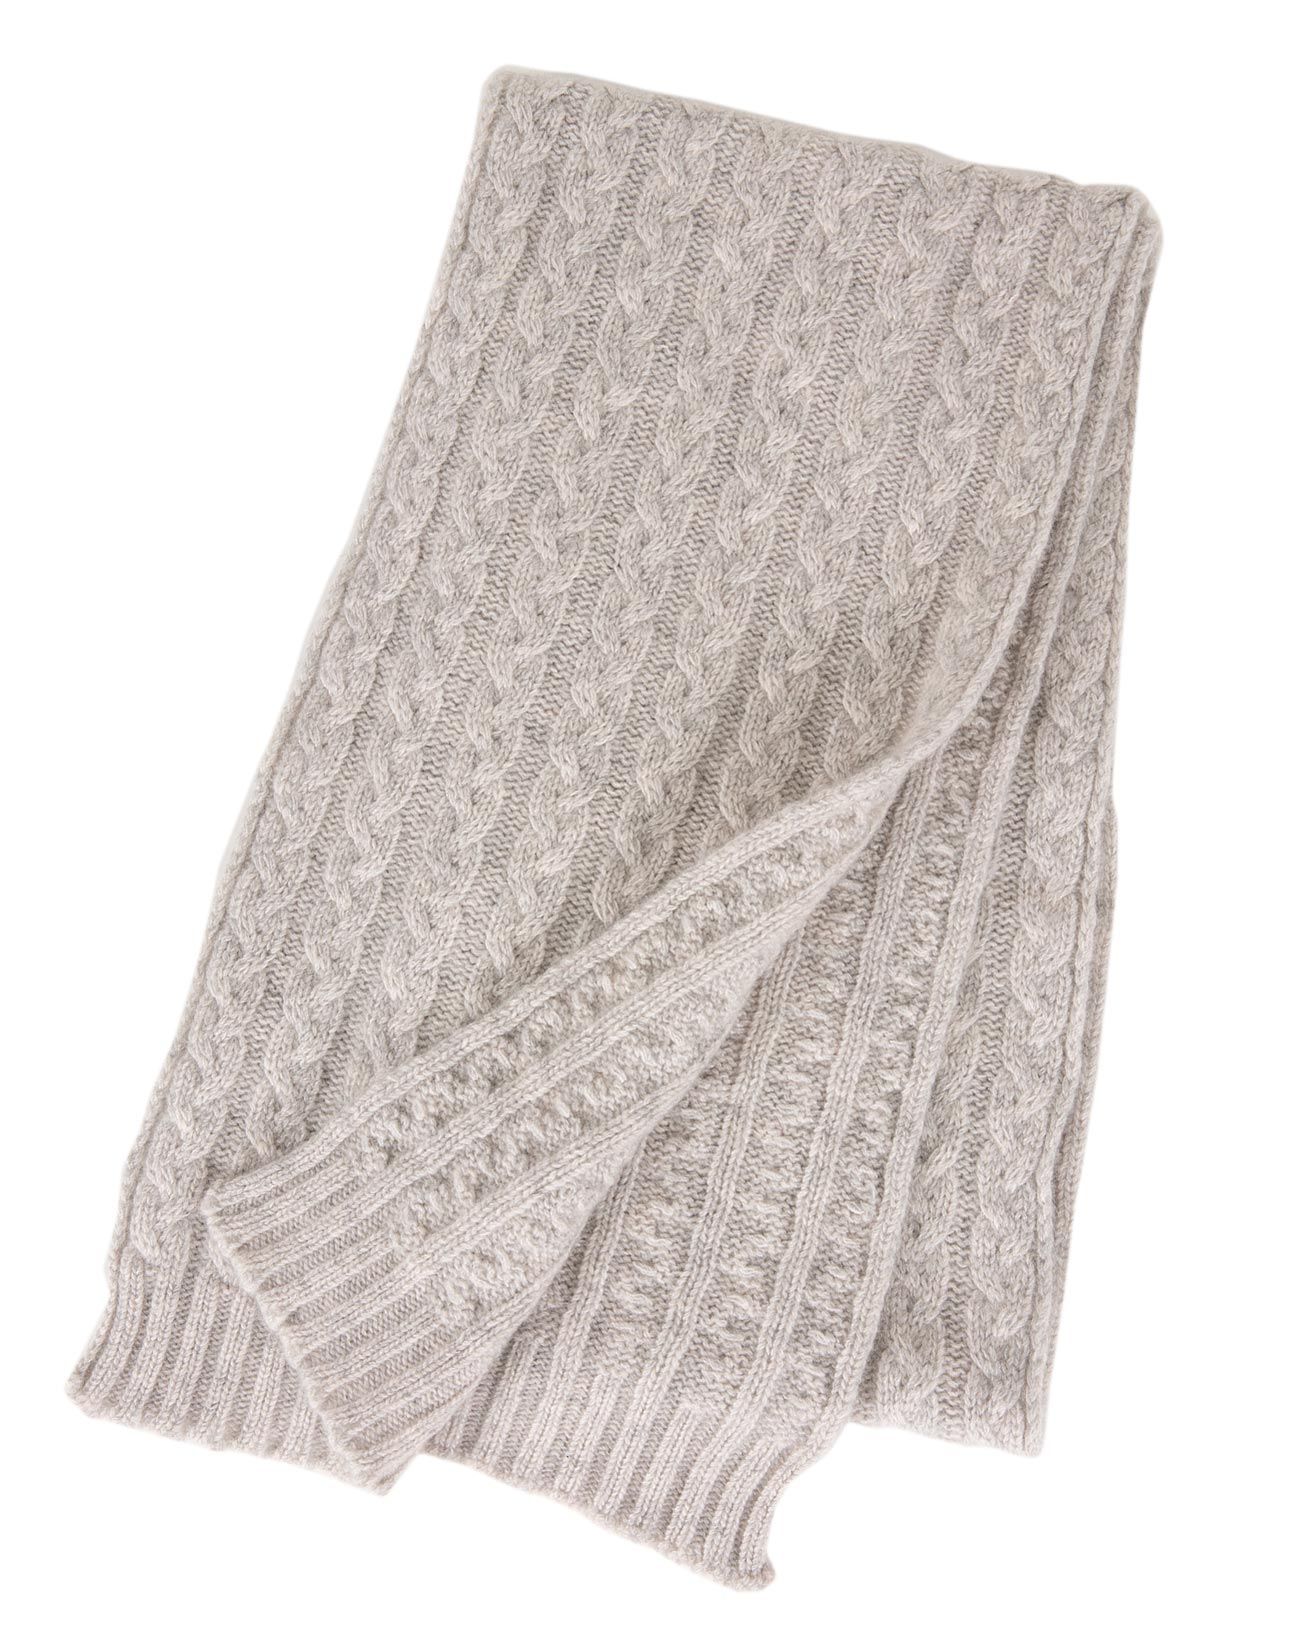 7529-statement scarf-dove grey scarf.jpg